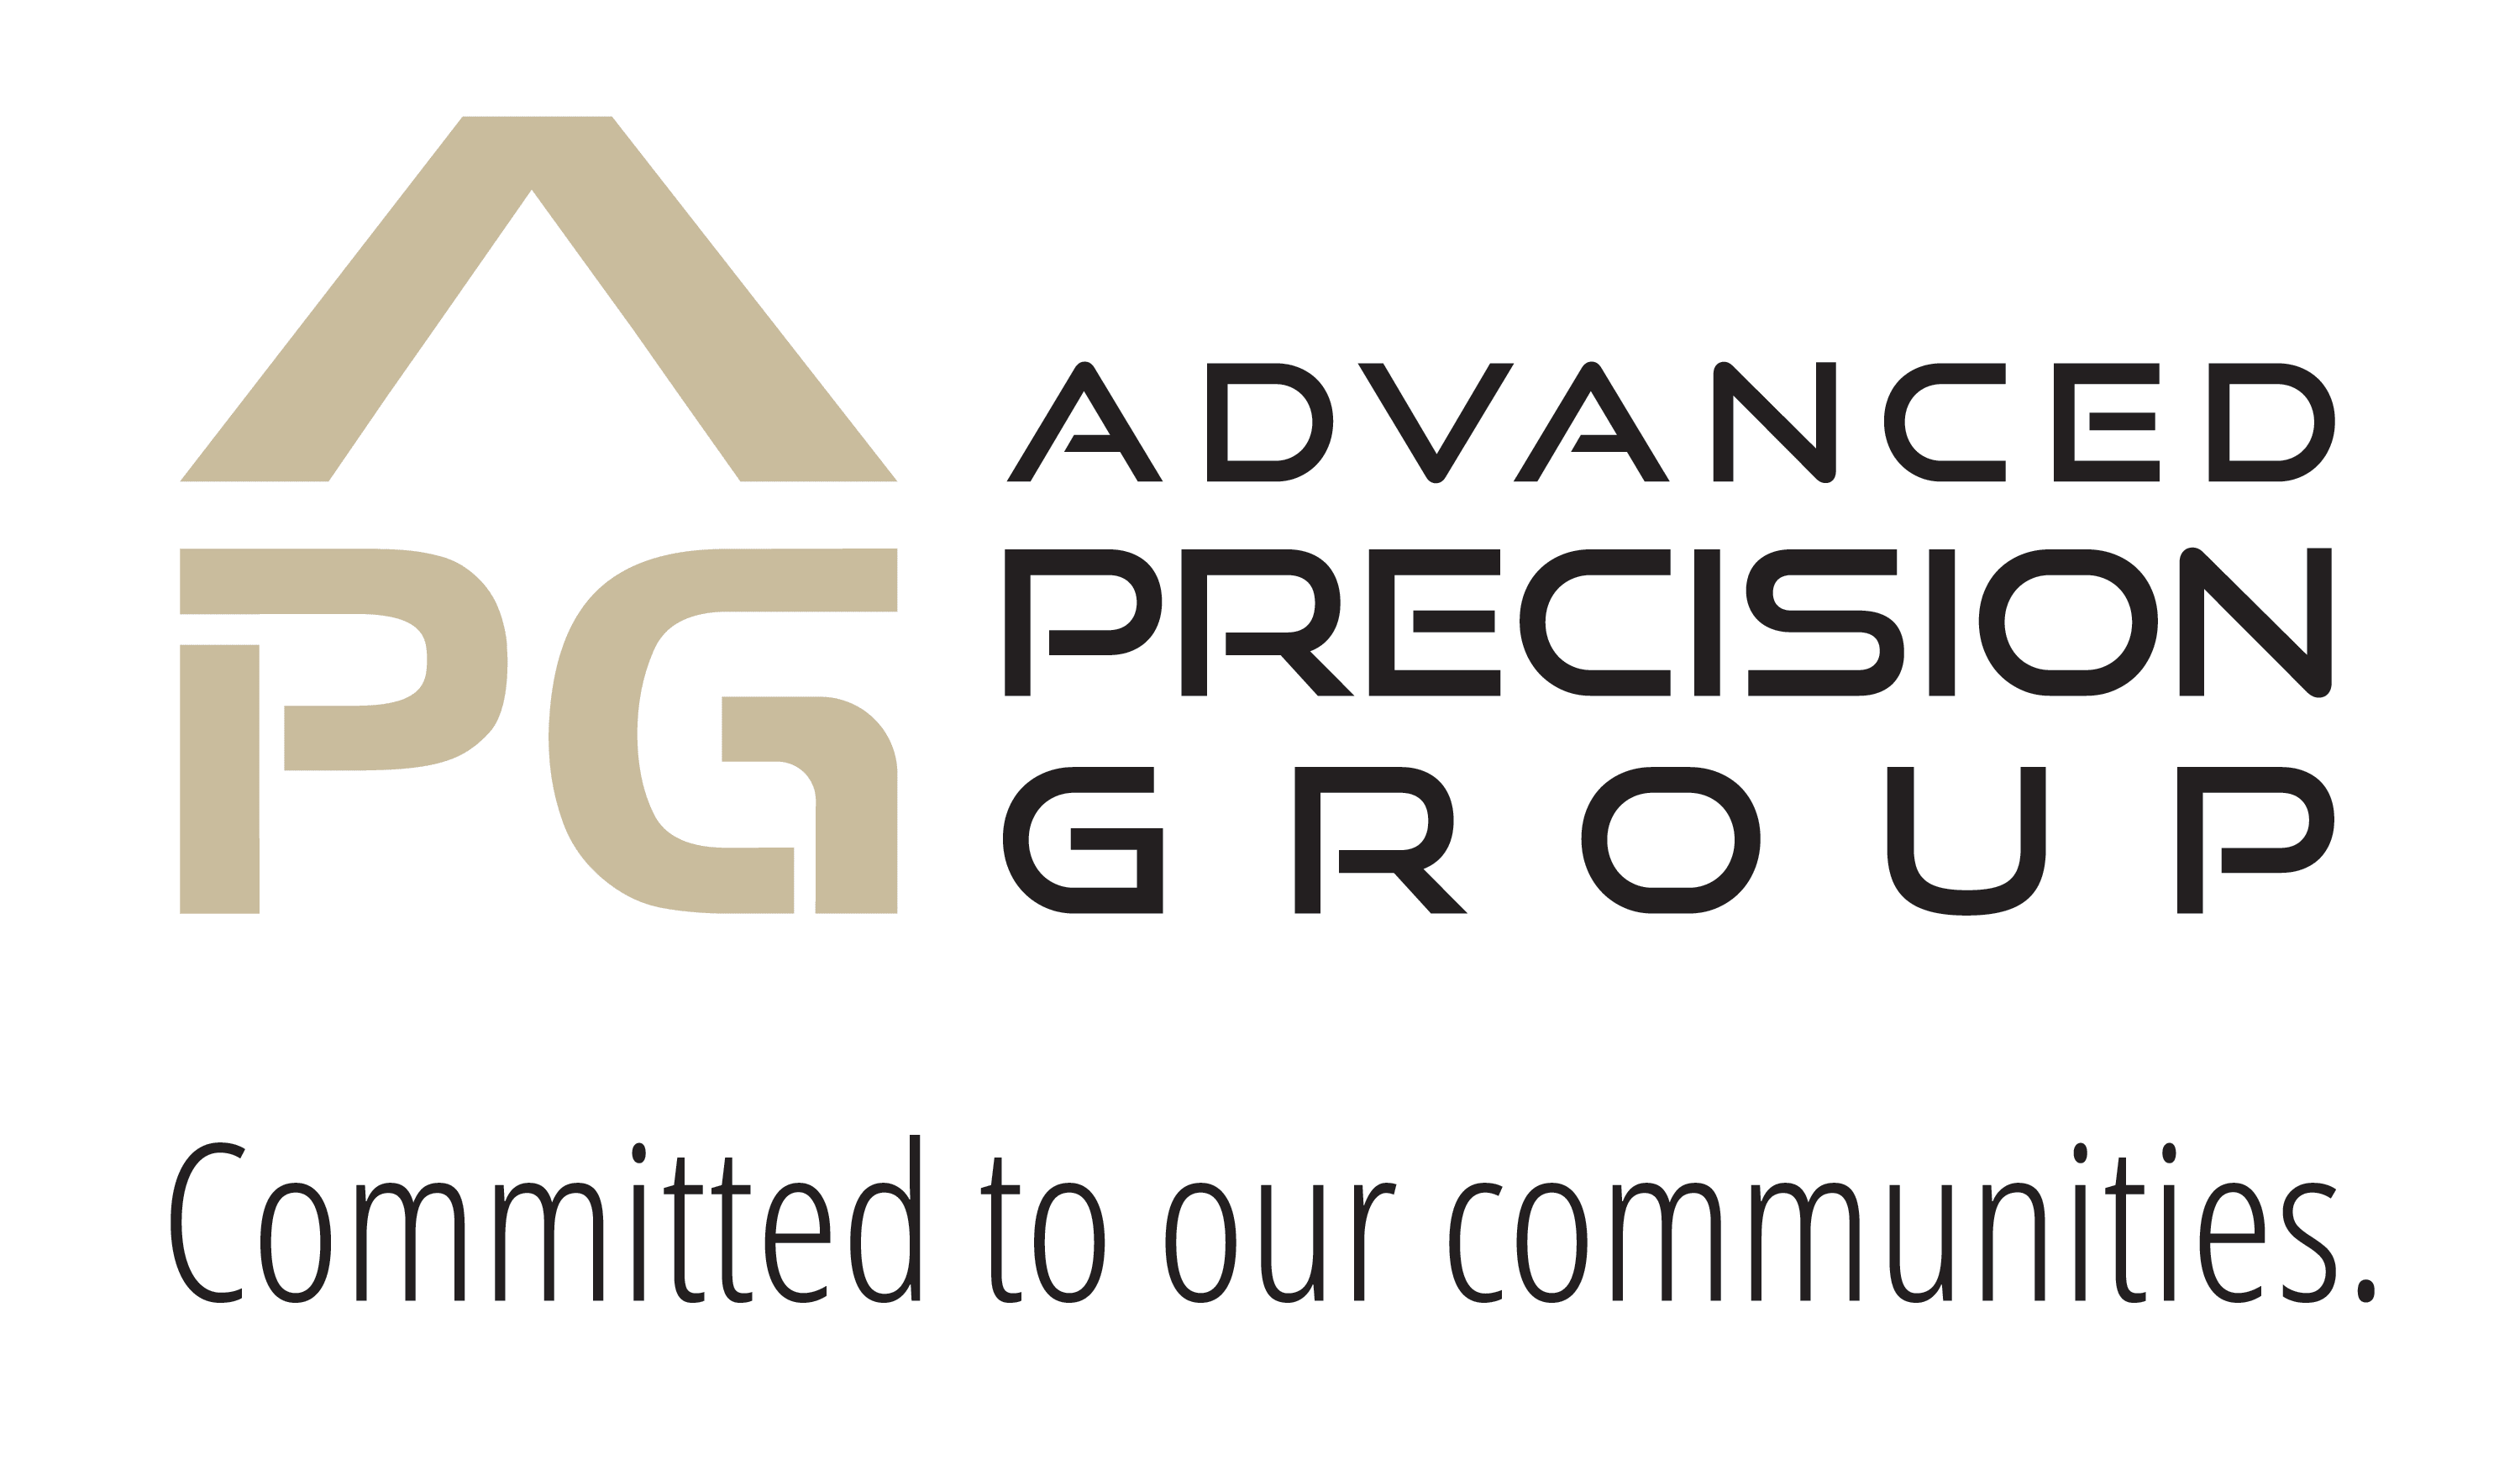 PG&E Logo PNG Transparent & SVG Vector - Freebie Supply